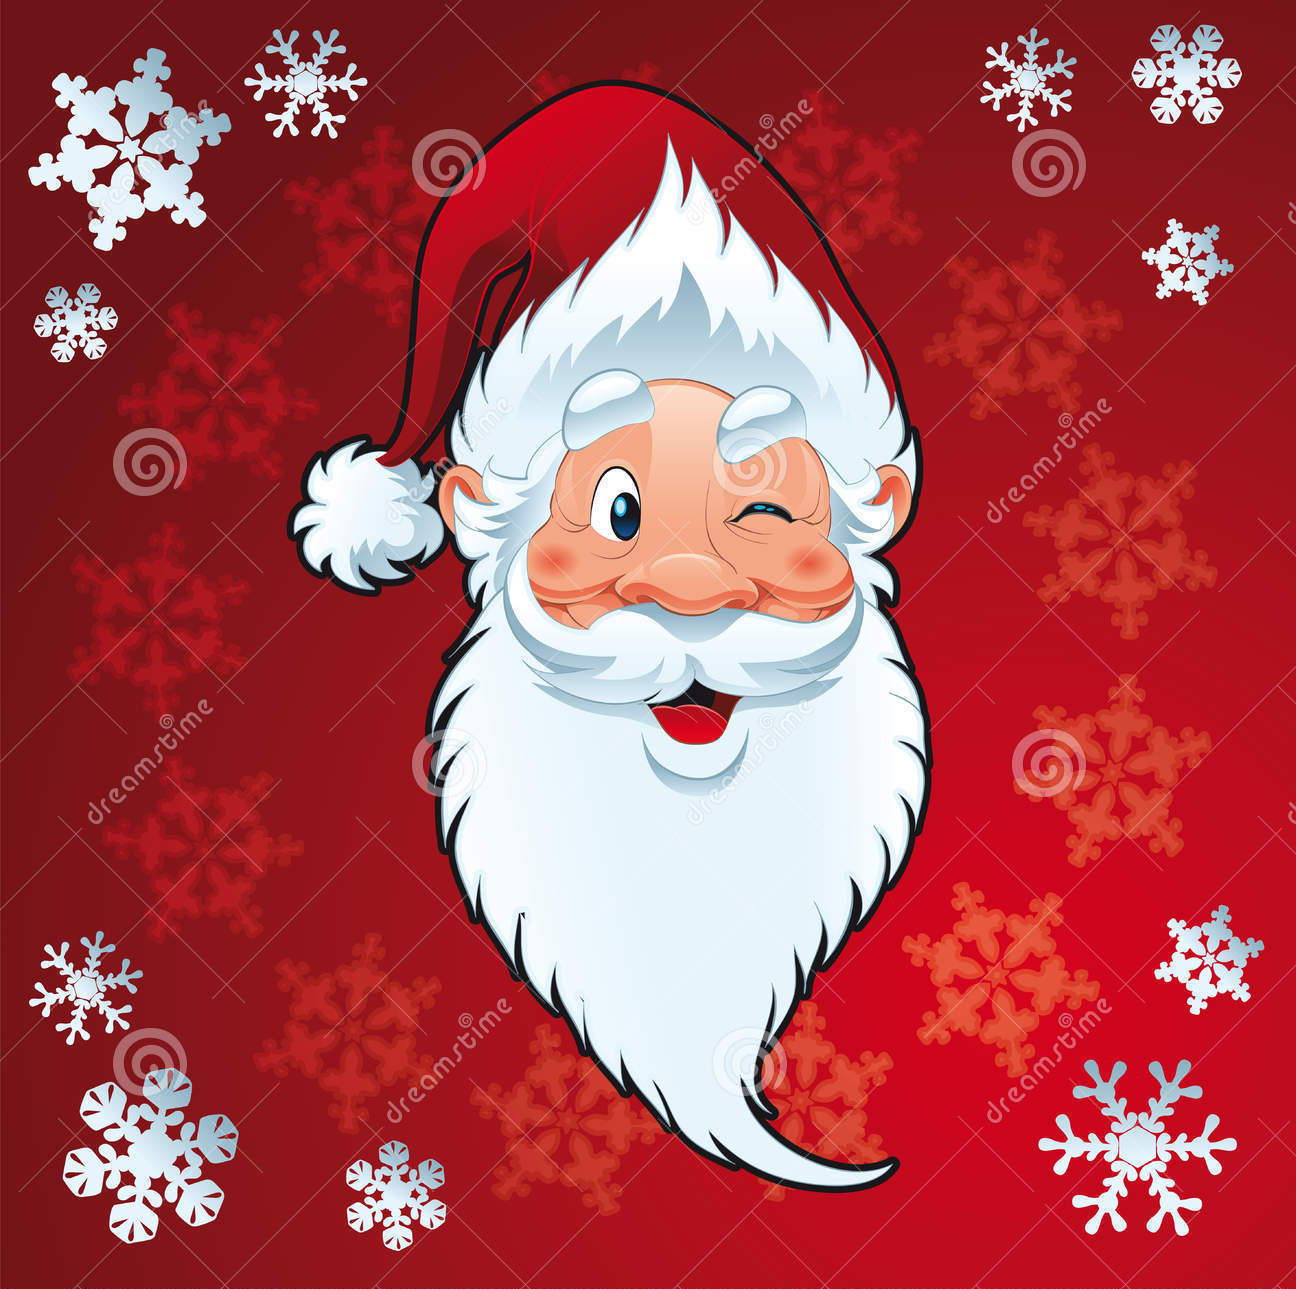 santa-claus-christmas-card-9728144